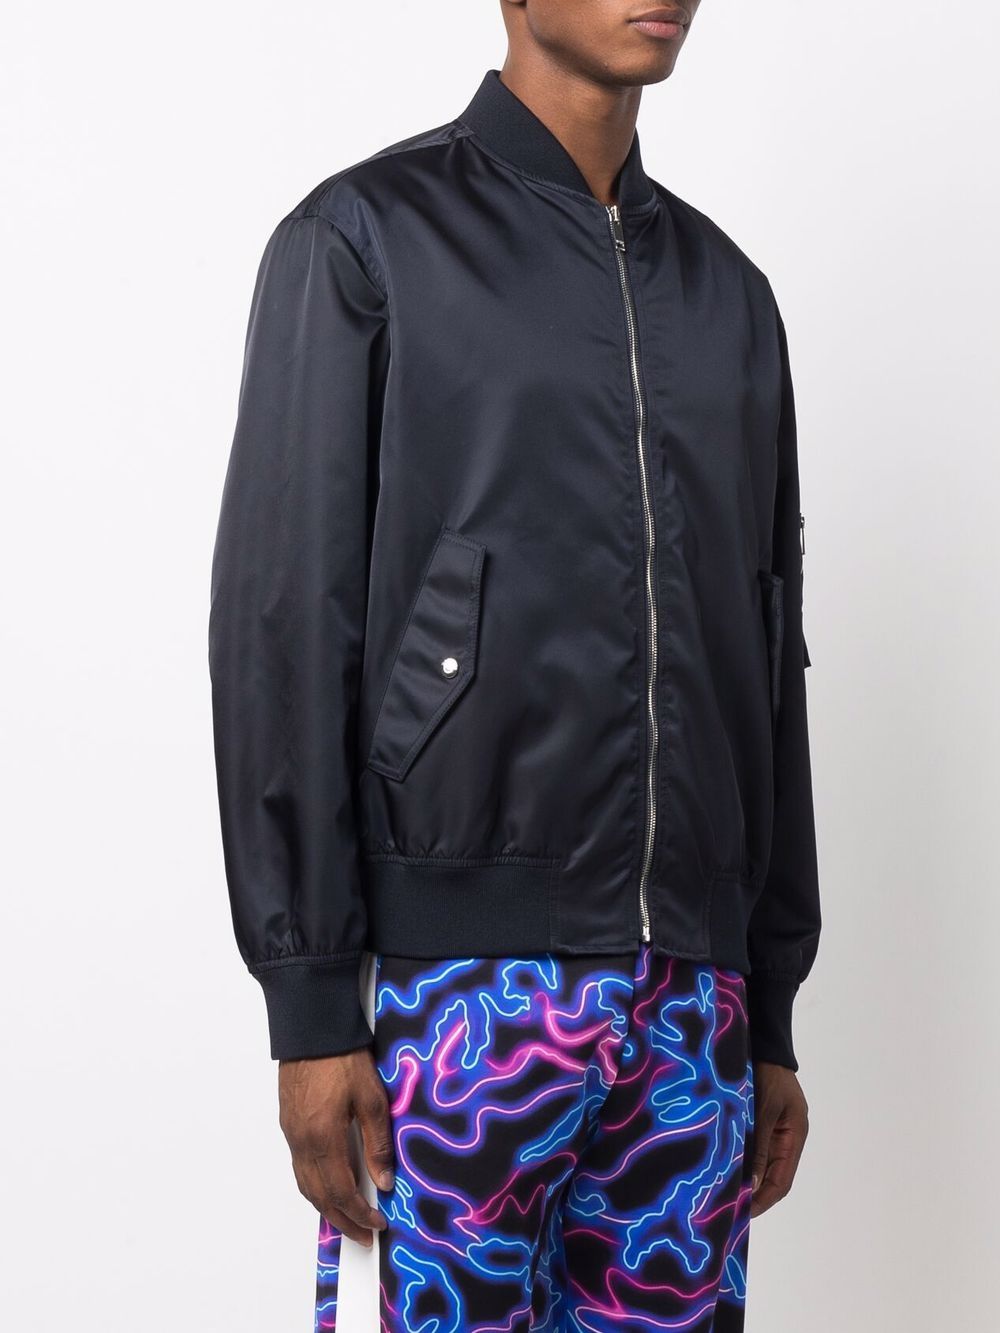 Neon Universe print bomber jacket